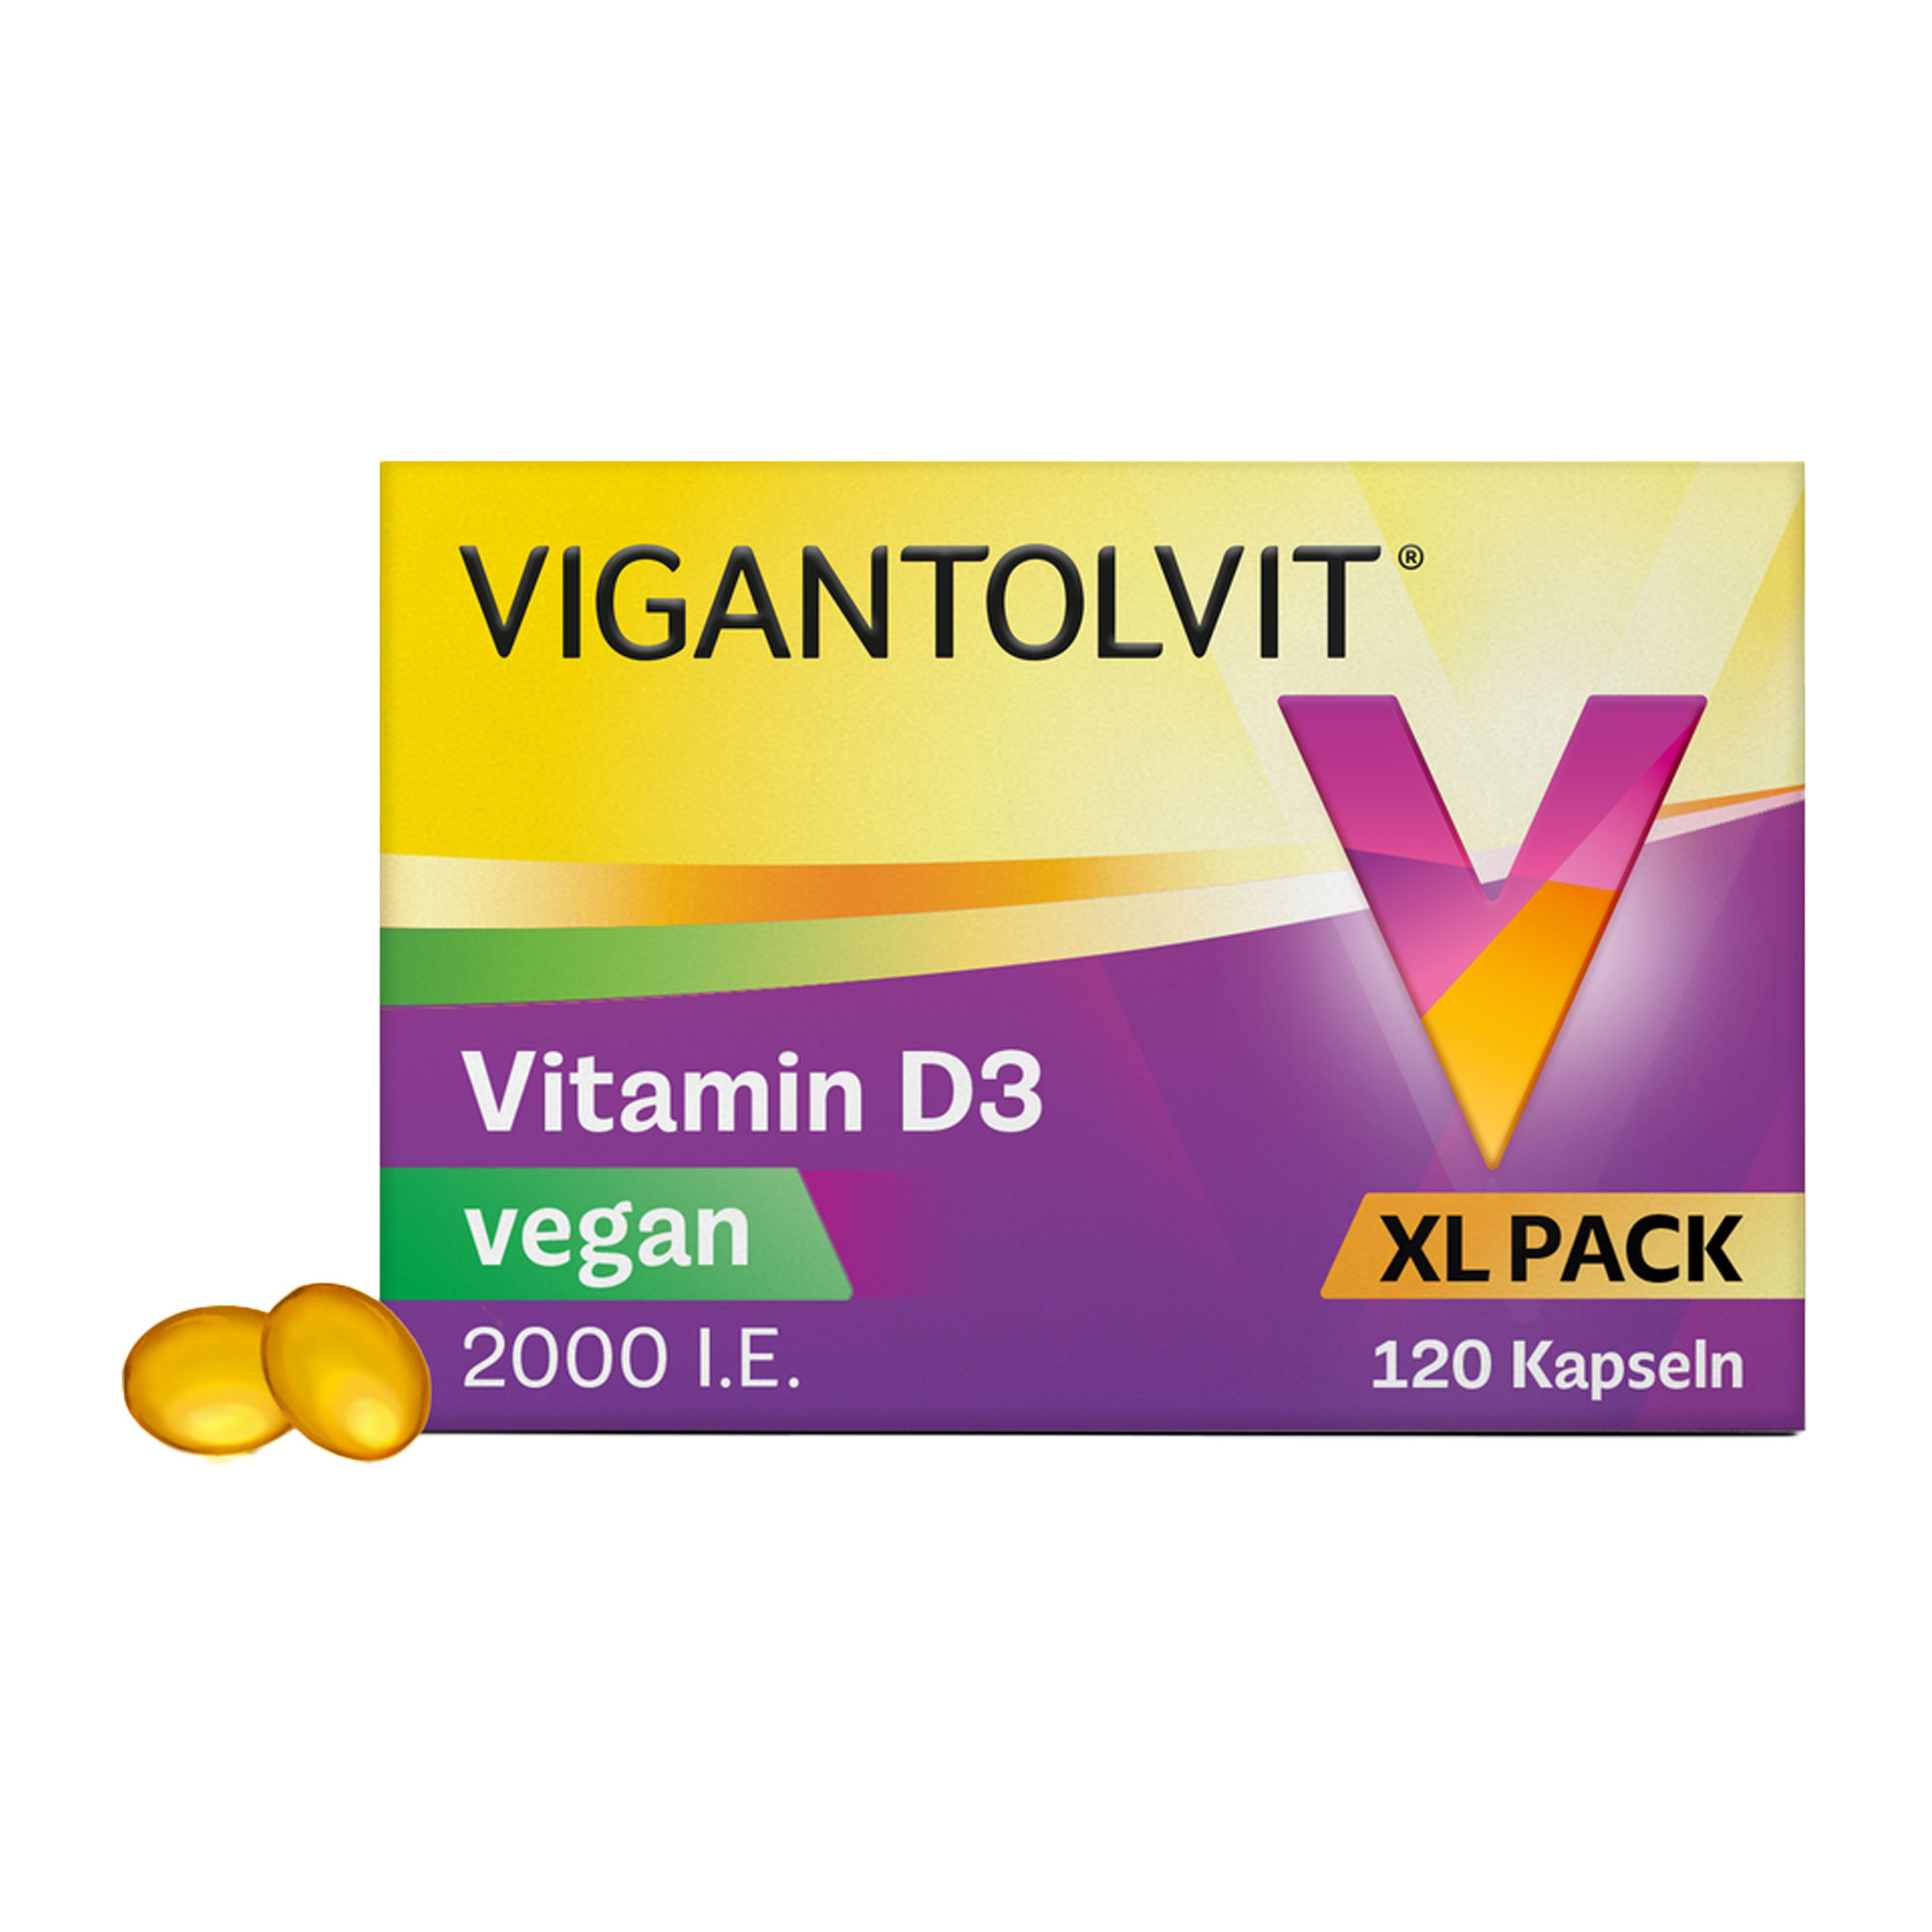 Nahrungsergänzungsmittel mit hochdosiertem Vitamin D3 (2000 I.E.). Vegane Kapseln.